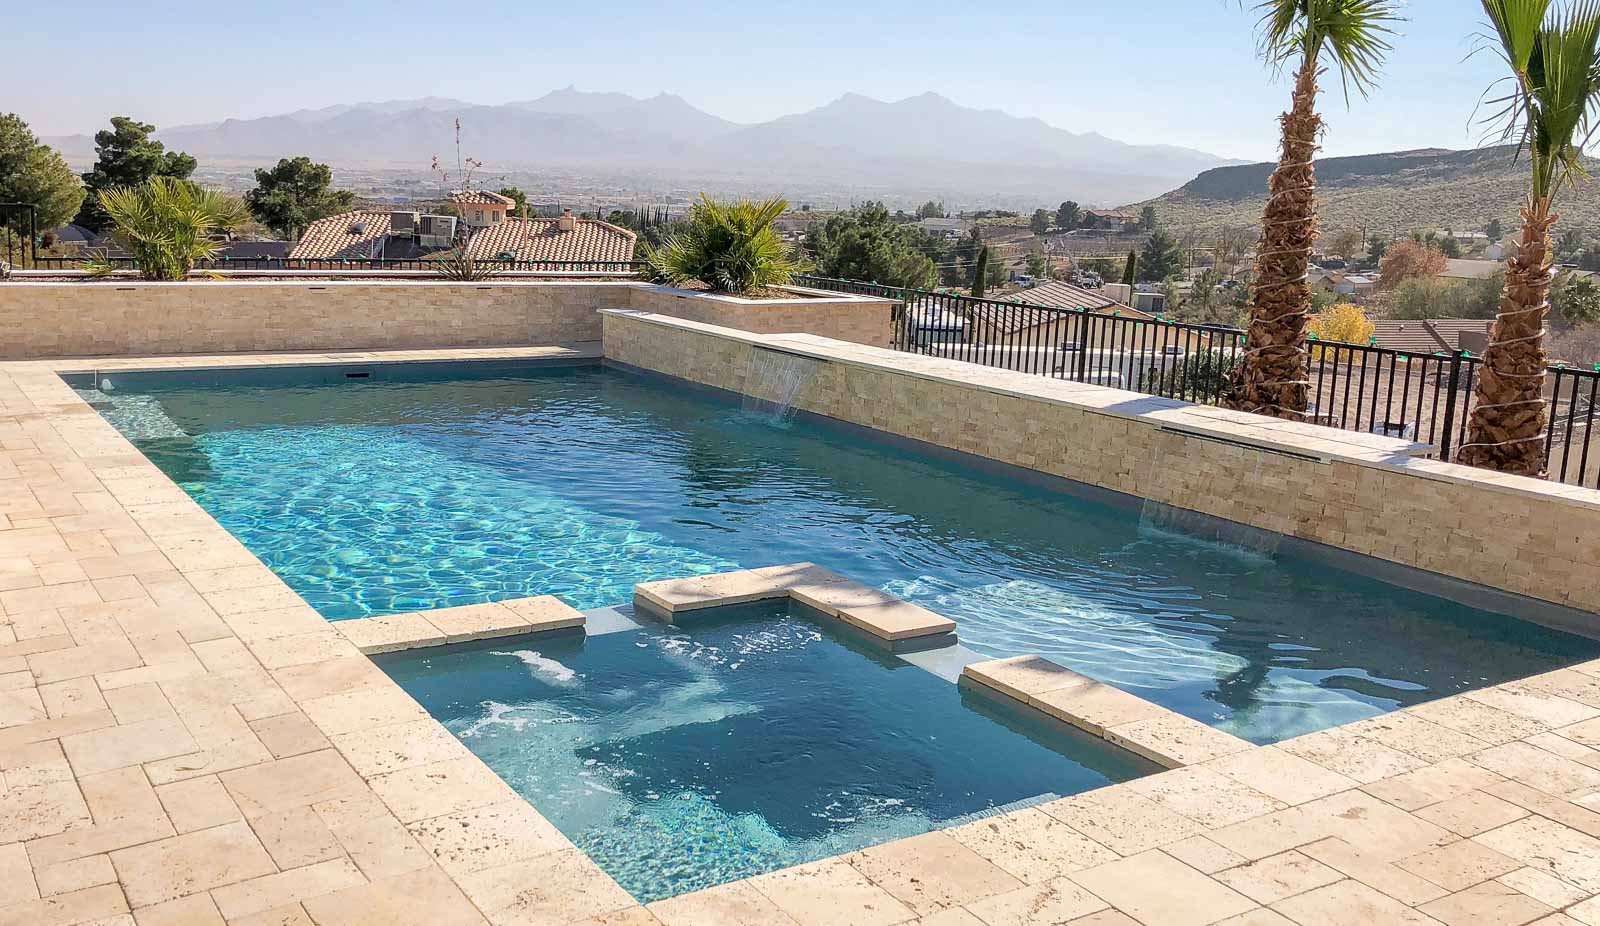 Leisure Pools Ultimate 40-foot fiberglass inground pool with built-in spa and splash deck